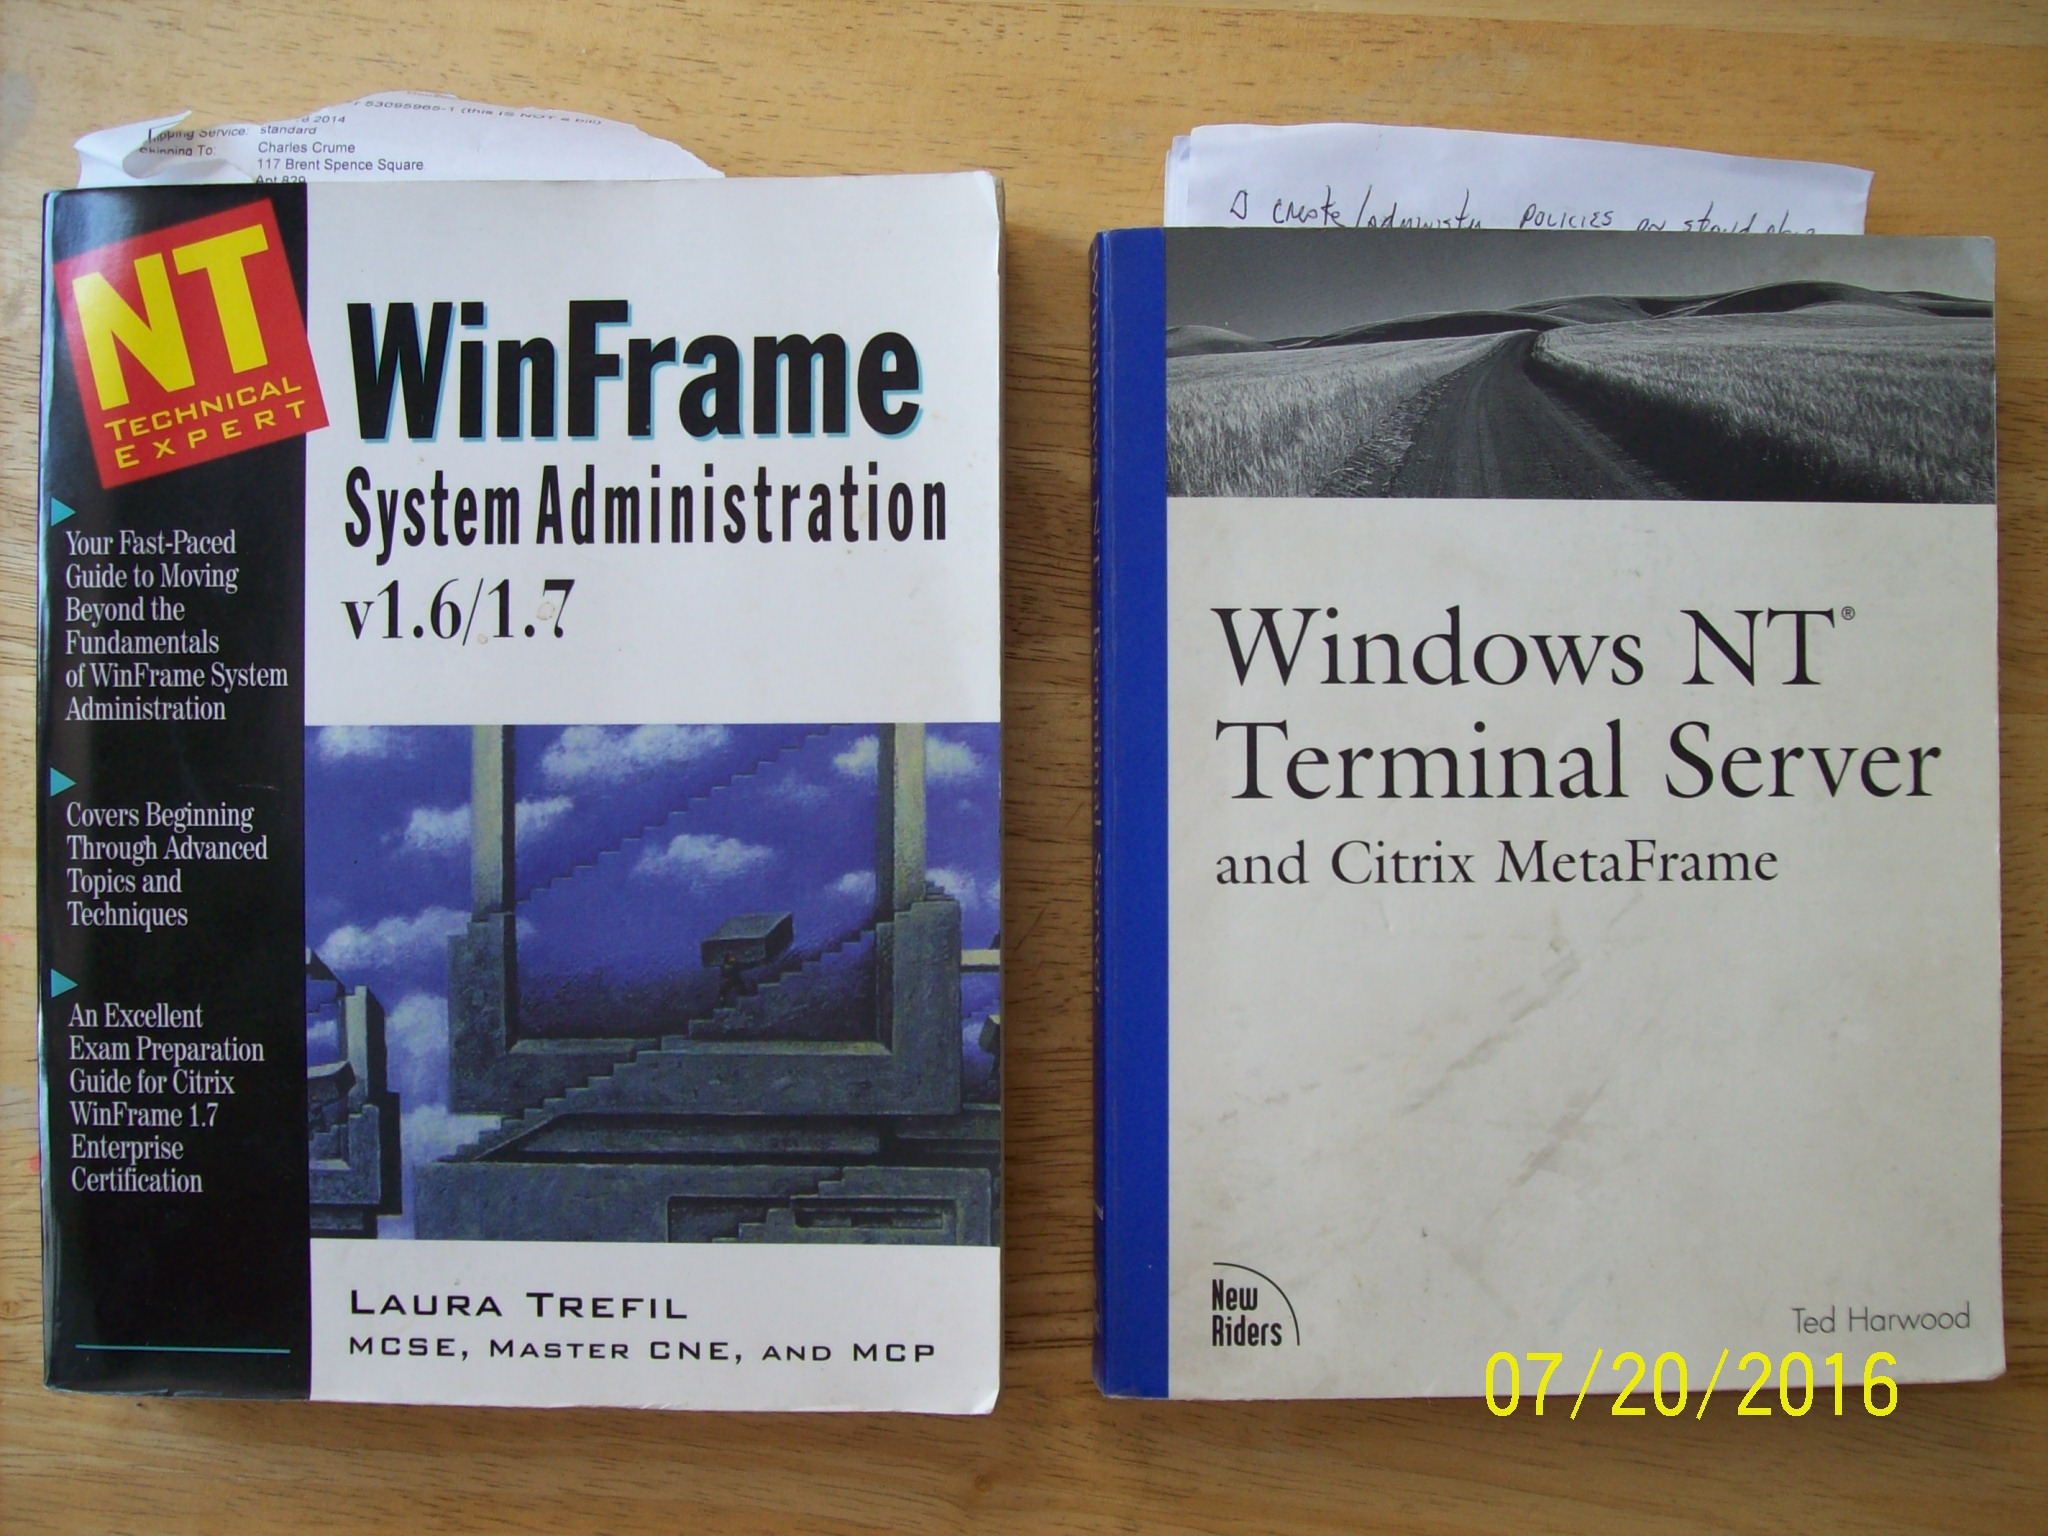 Windows Terminal Server Dual Boot NT4 and Citrix WinFrame v1.7 Enterprise & More